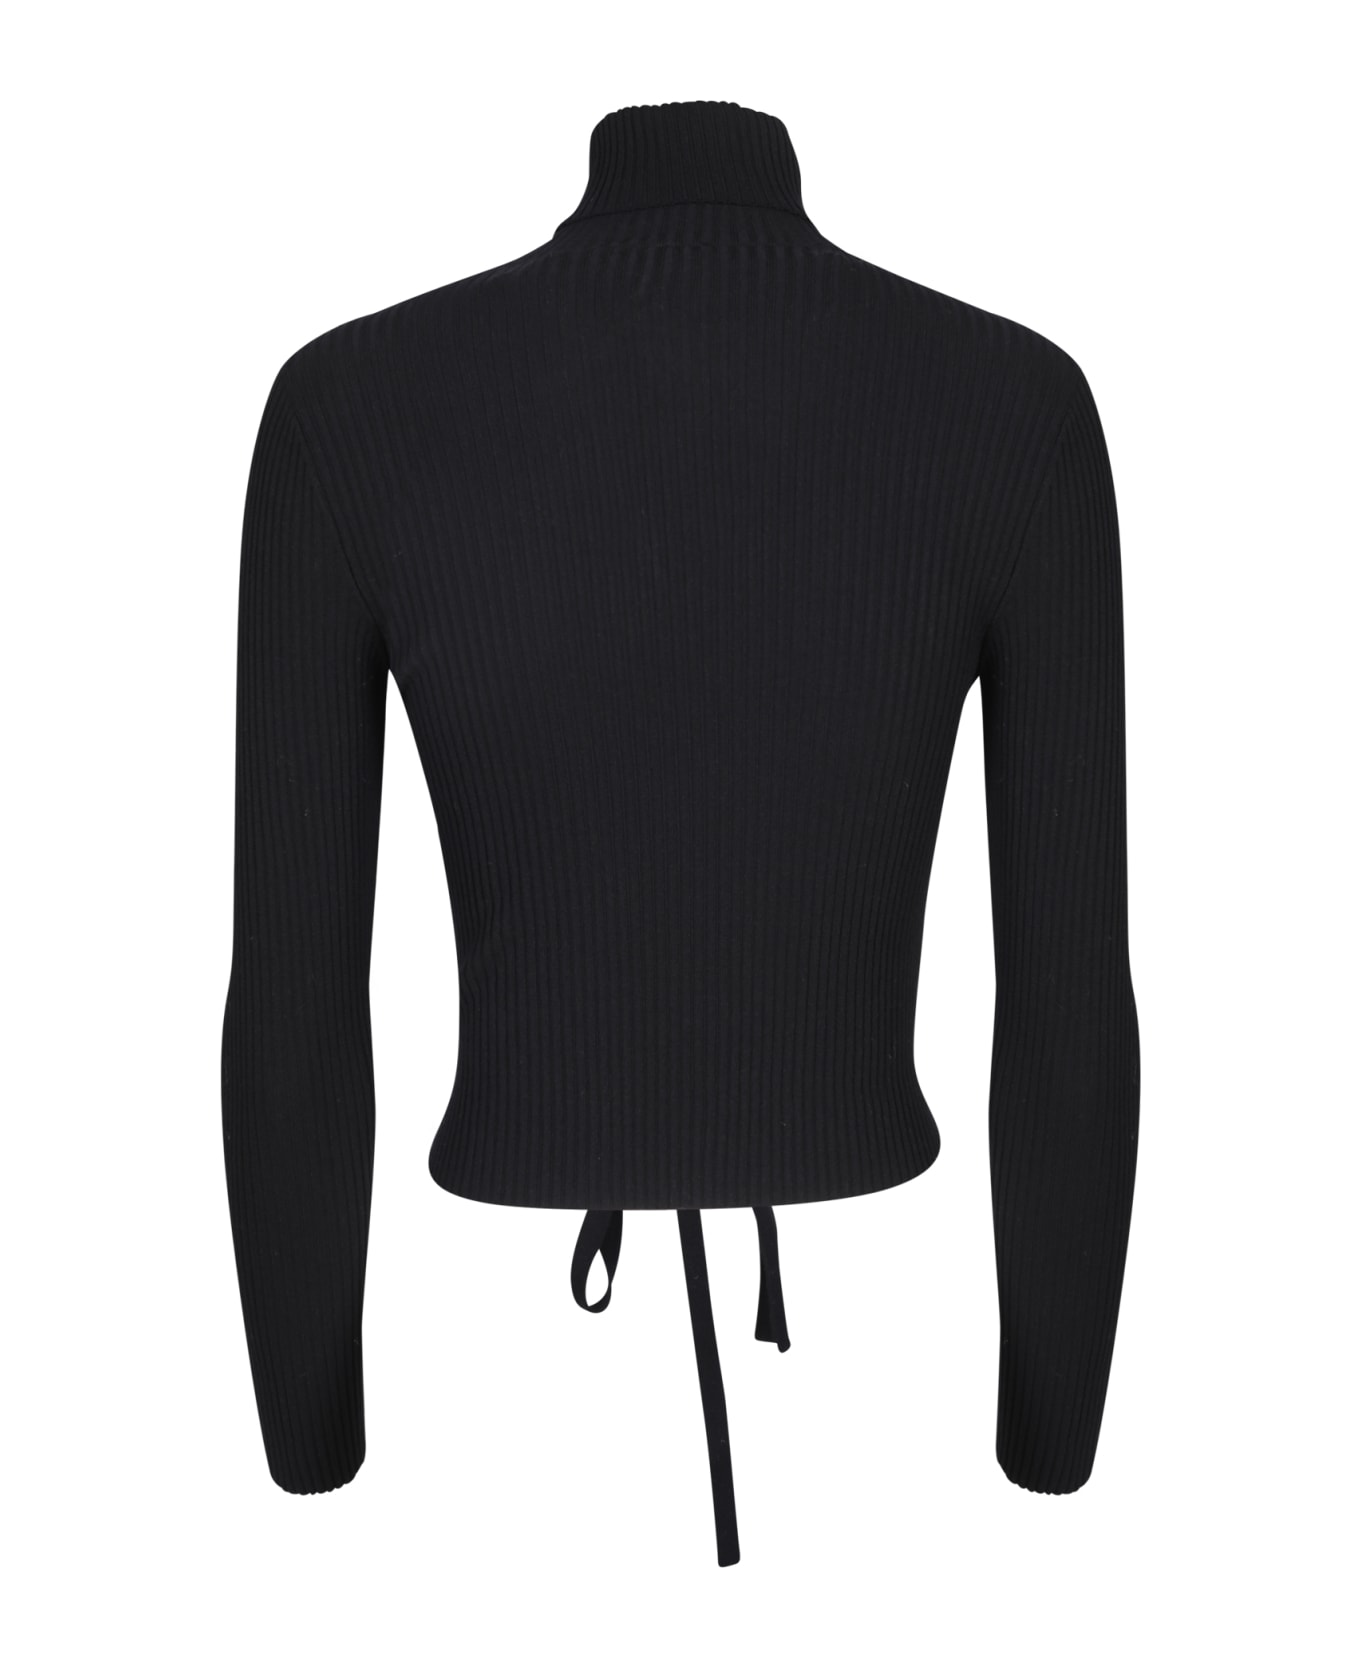 SSHEENA Black Lace-up Cropped Sweater - Black ニットウェア